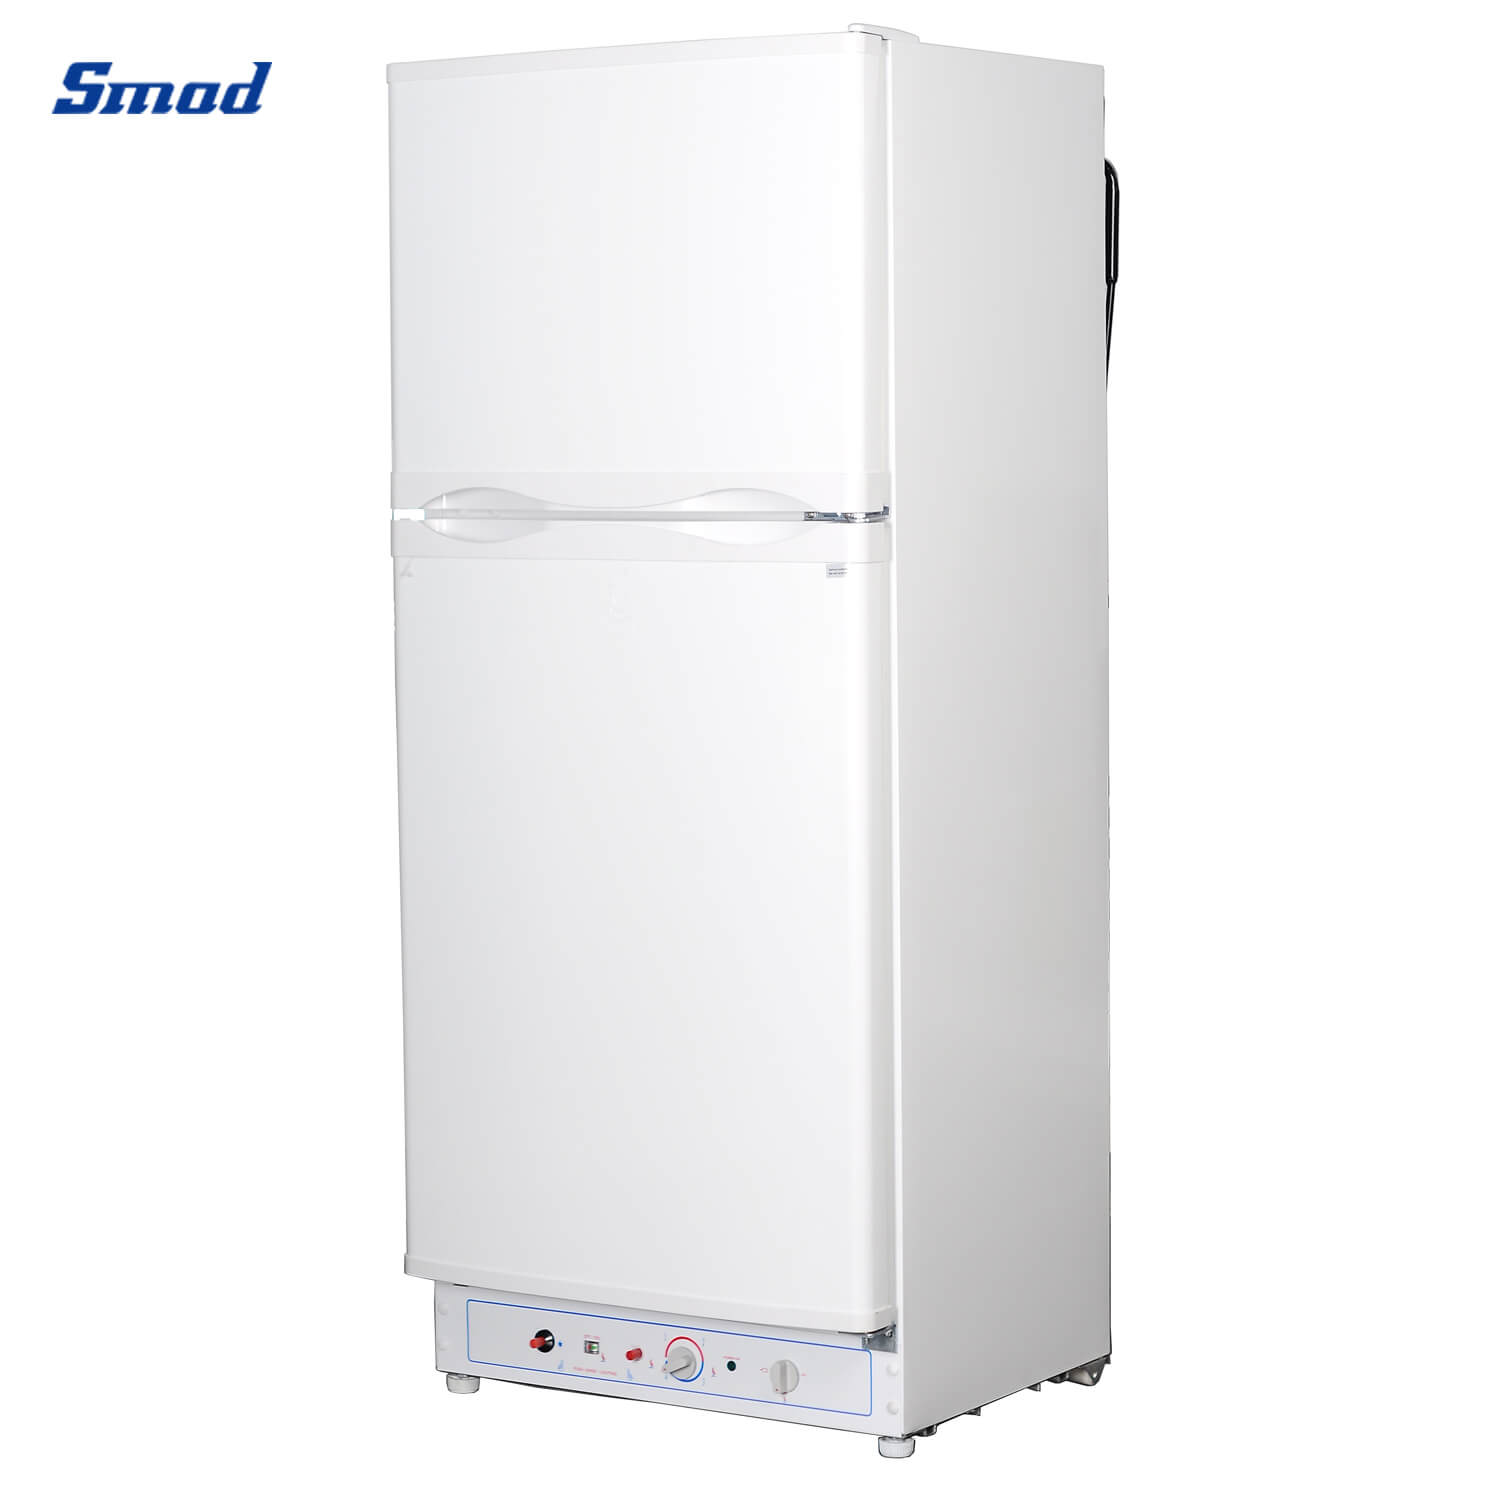 
Smad 7.9 Cu. Ft. Double Door Natural Gas Auto Defrost Refrigerator